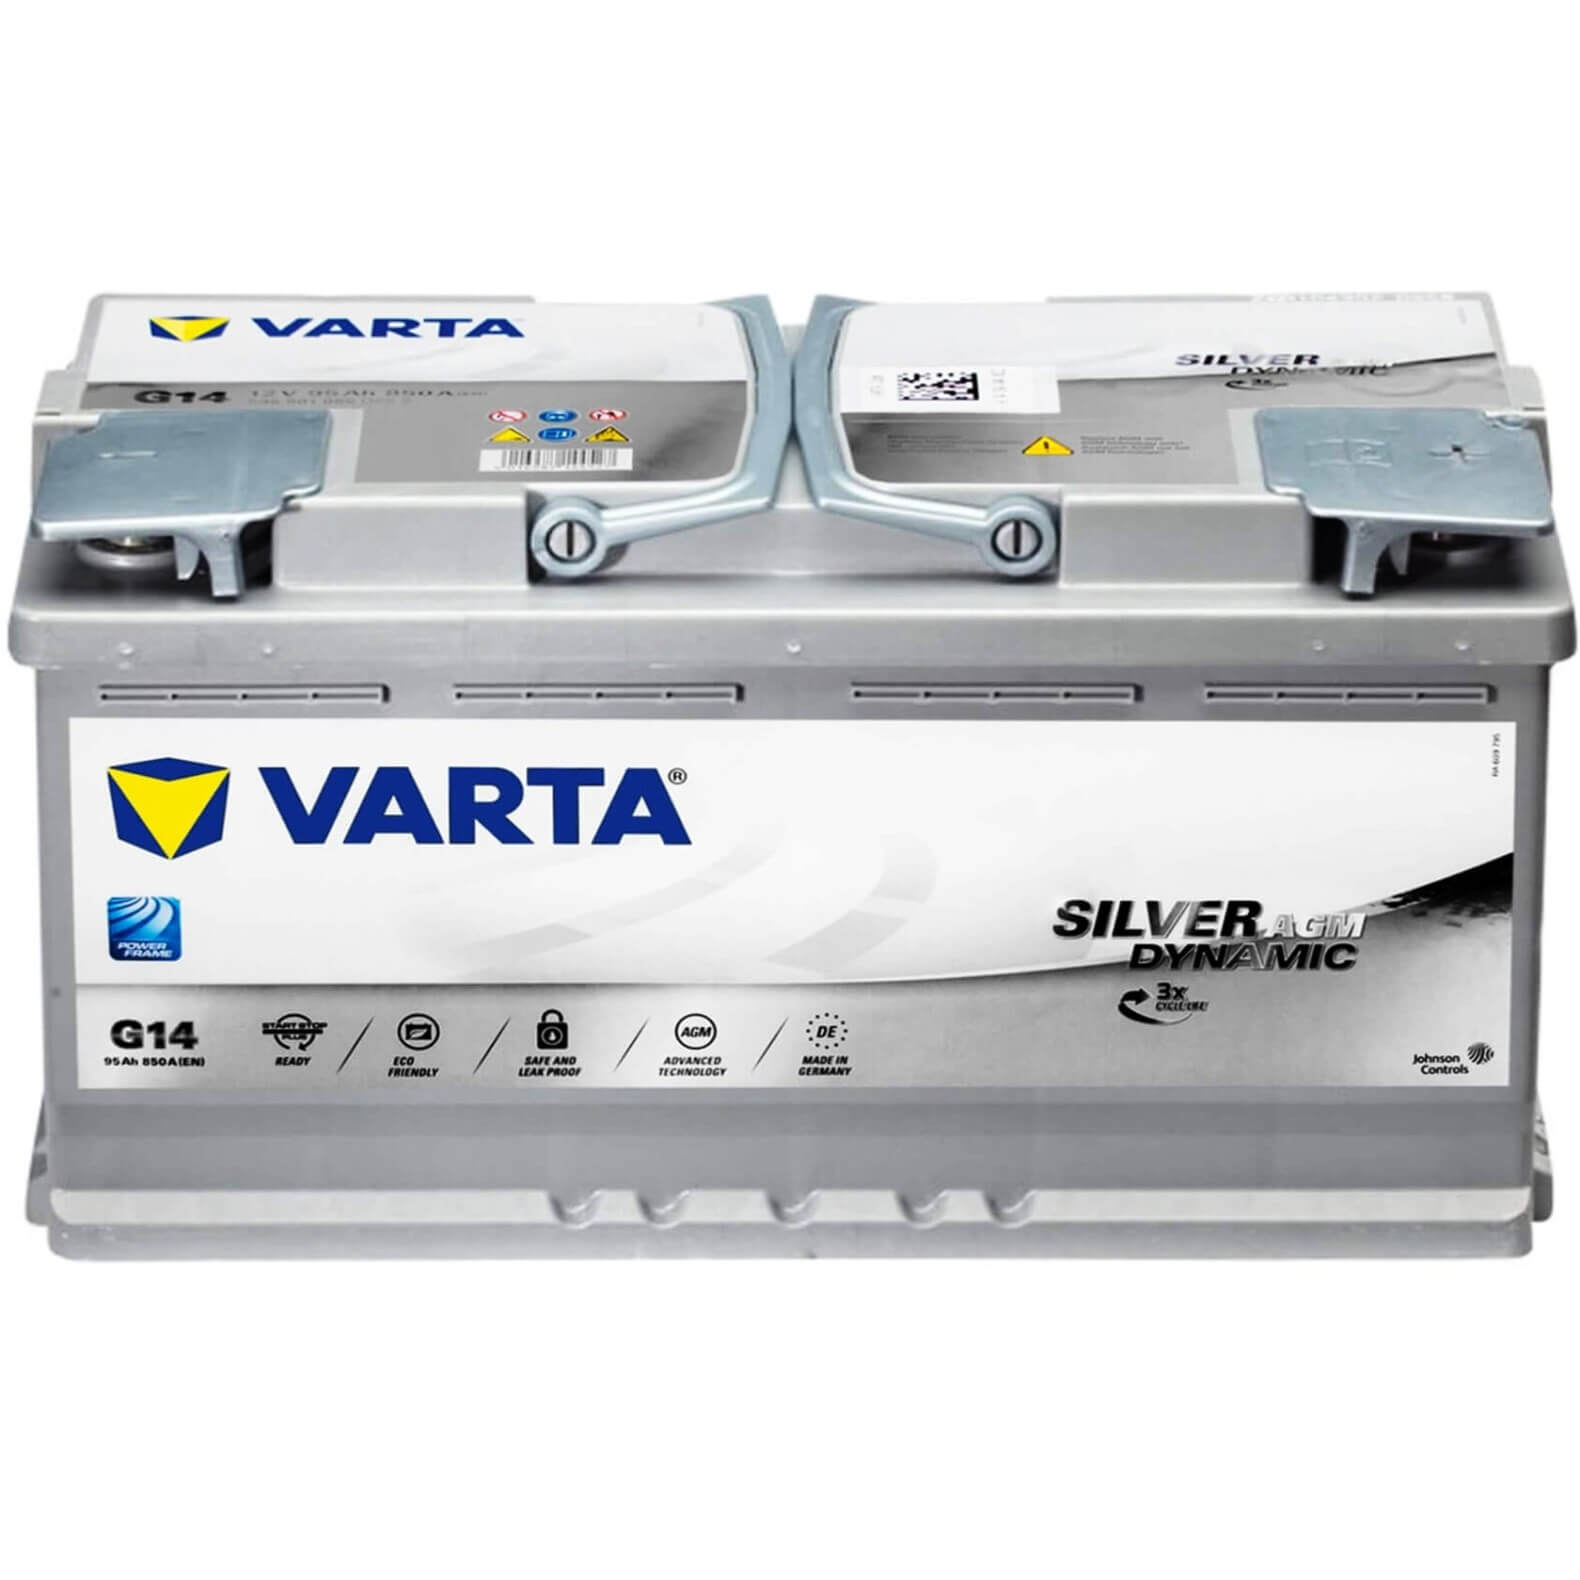 VARTA Silver Dynamic AGM Autobatterie speziell für Start-Stop-Technologie,  G14, 595 901 085, 95 Ah, 850 A - ATU